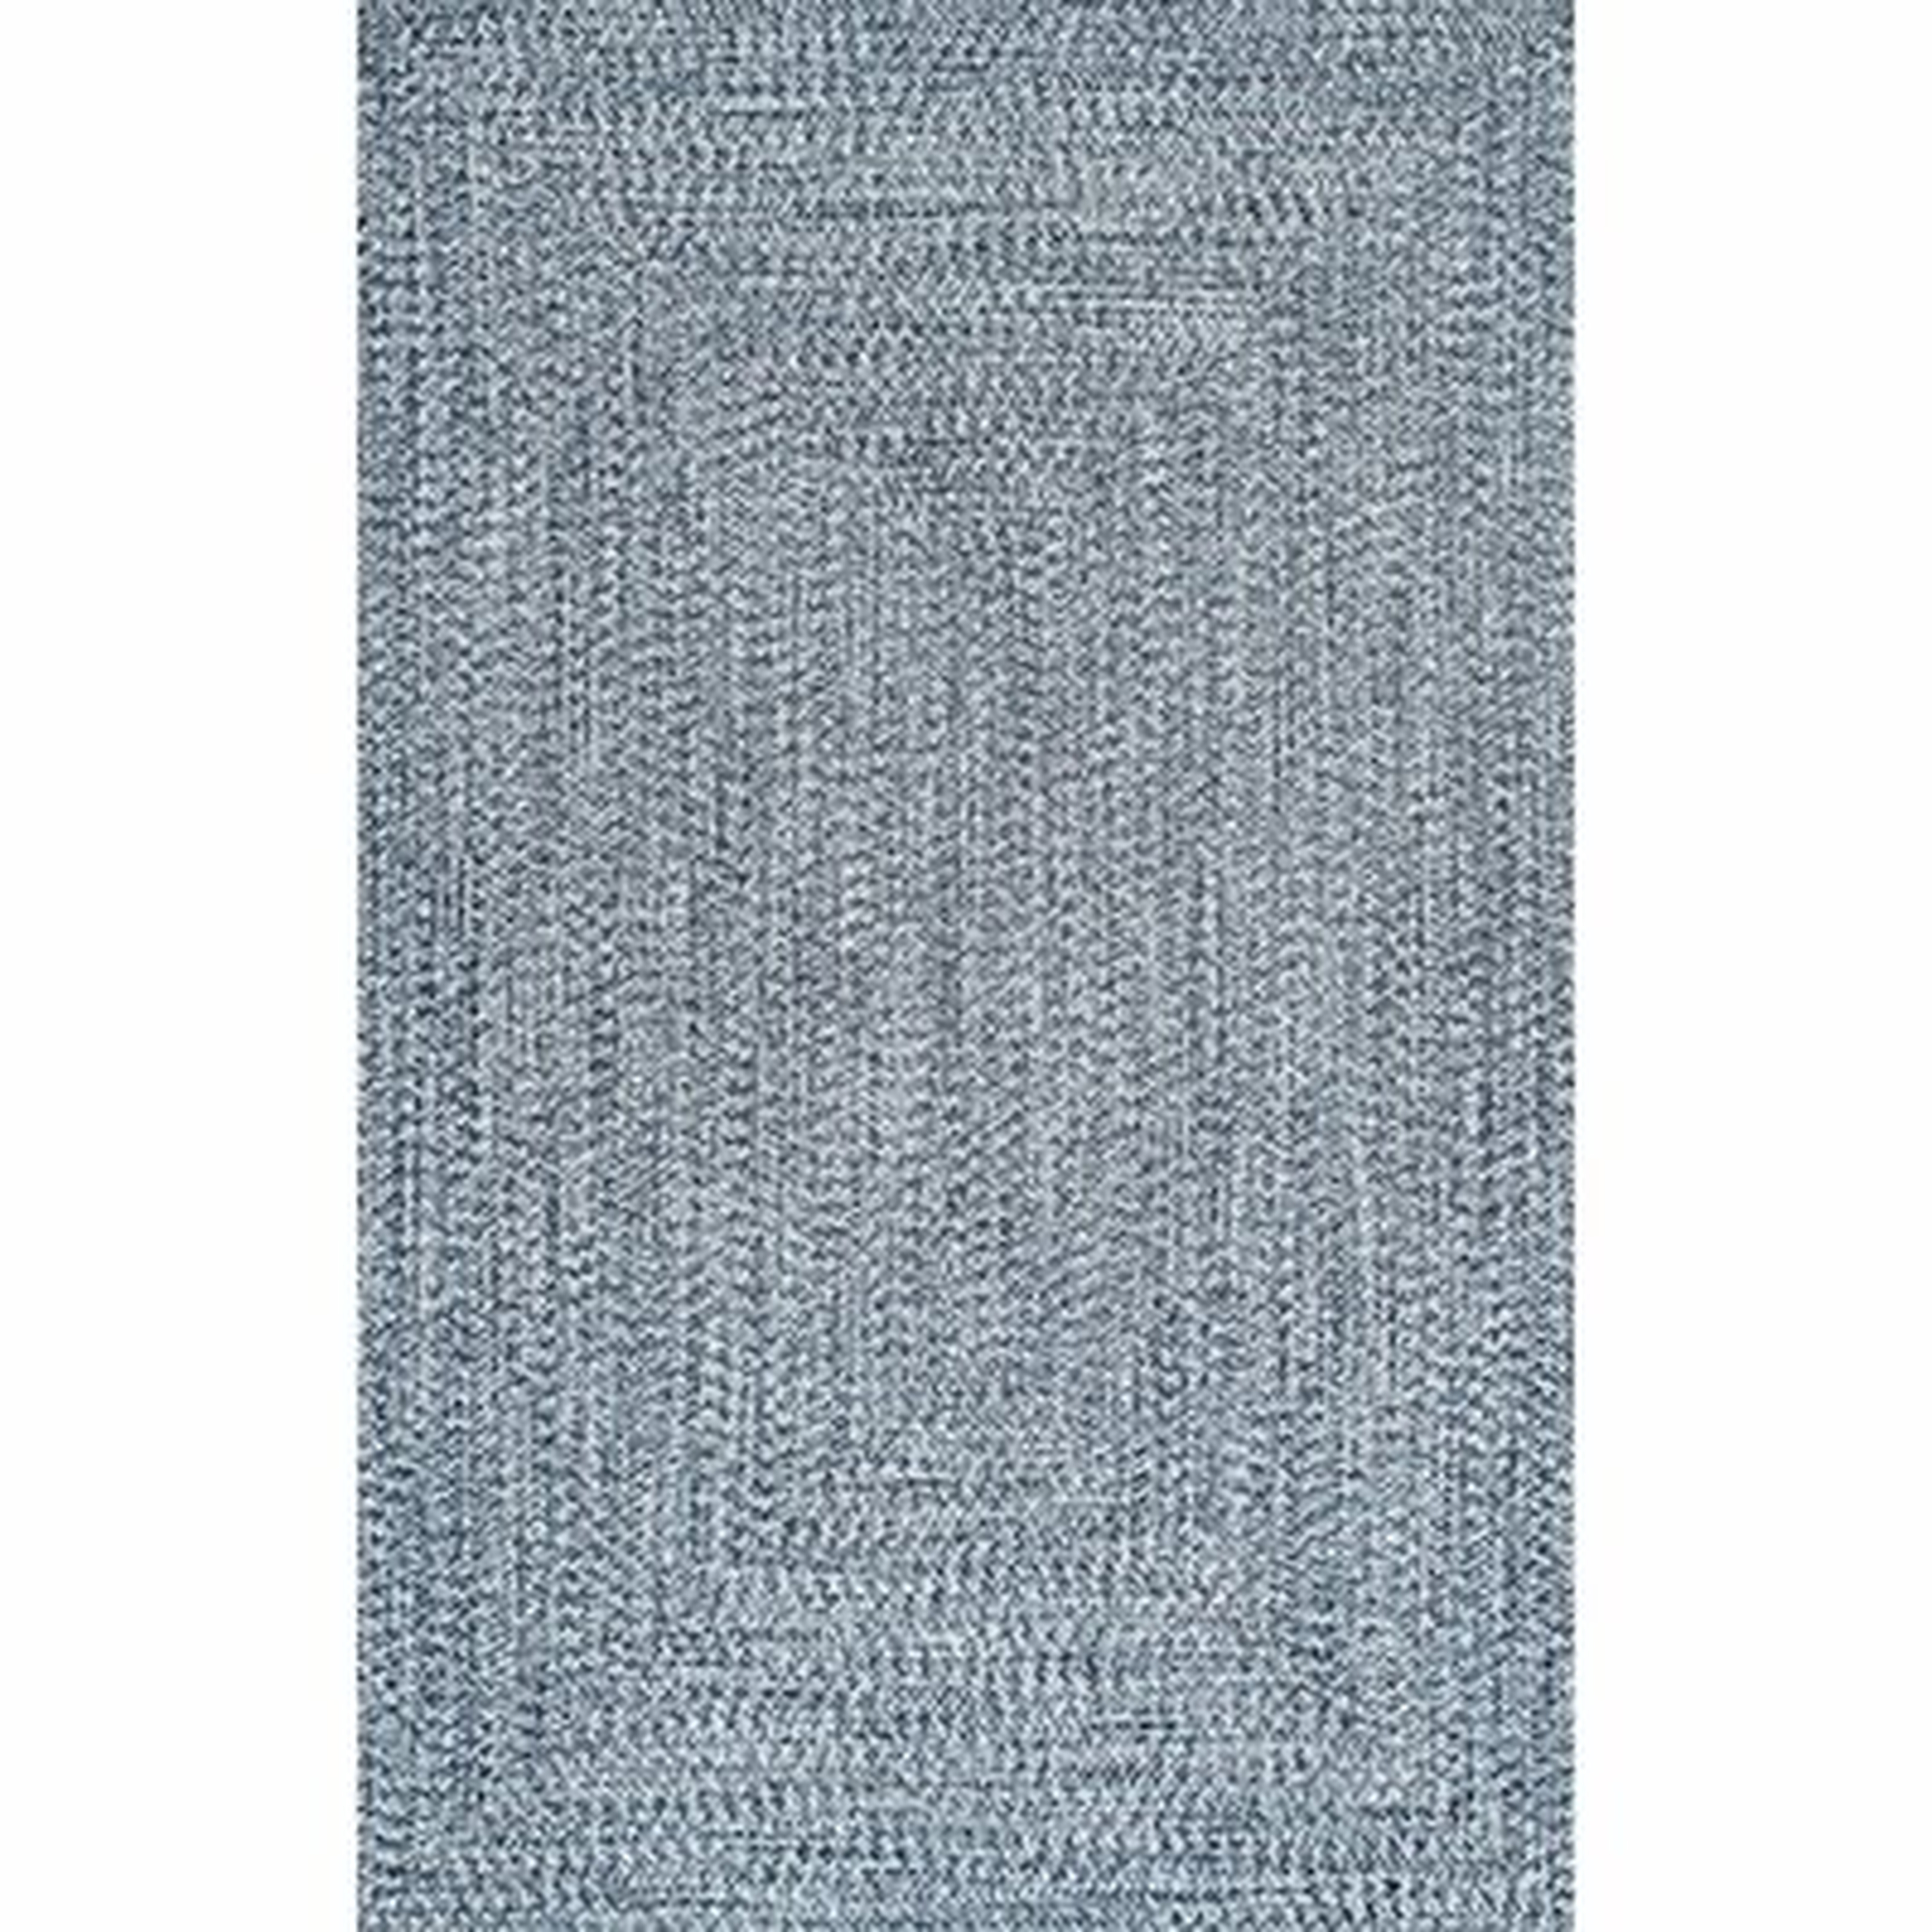 Killebrew Hand Braided Blue Indoor/Outdoor Area Rug, 6' x 9' - Wayfair